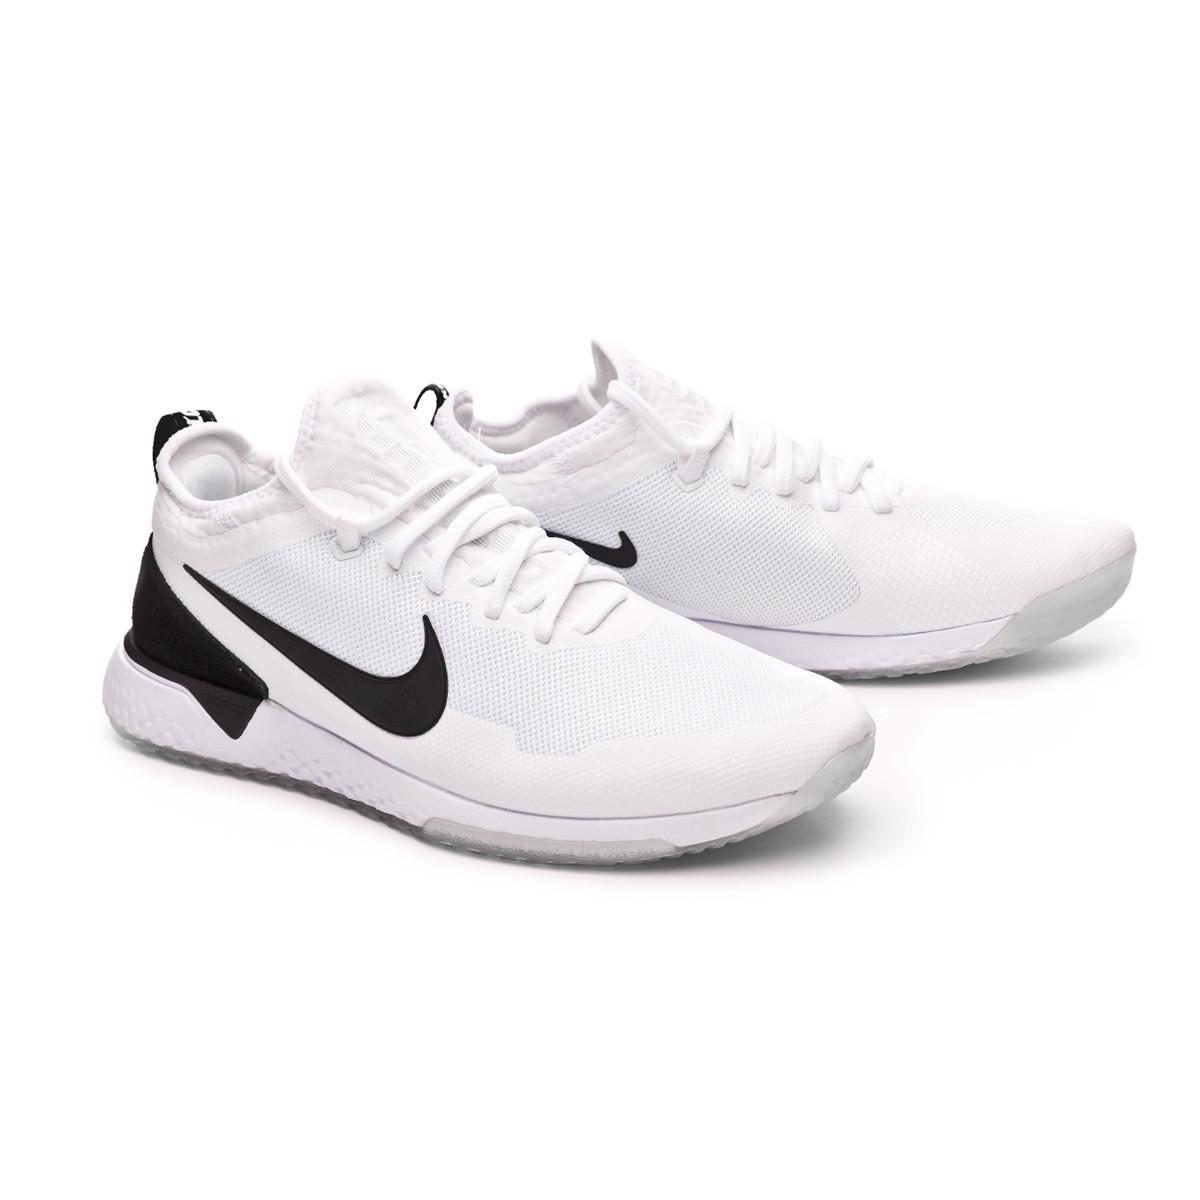 Zapatilla Nike Nike F.C. White-Black - Tienda de fútbol Fútbol Emotion